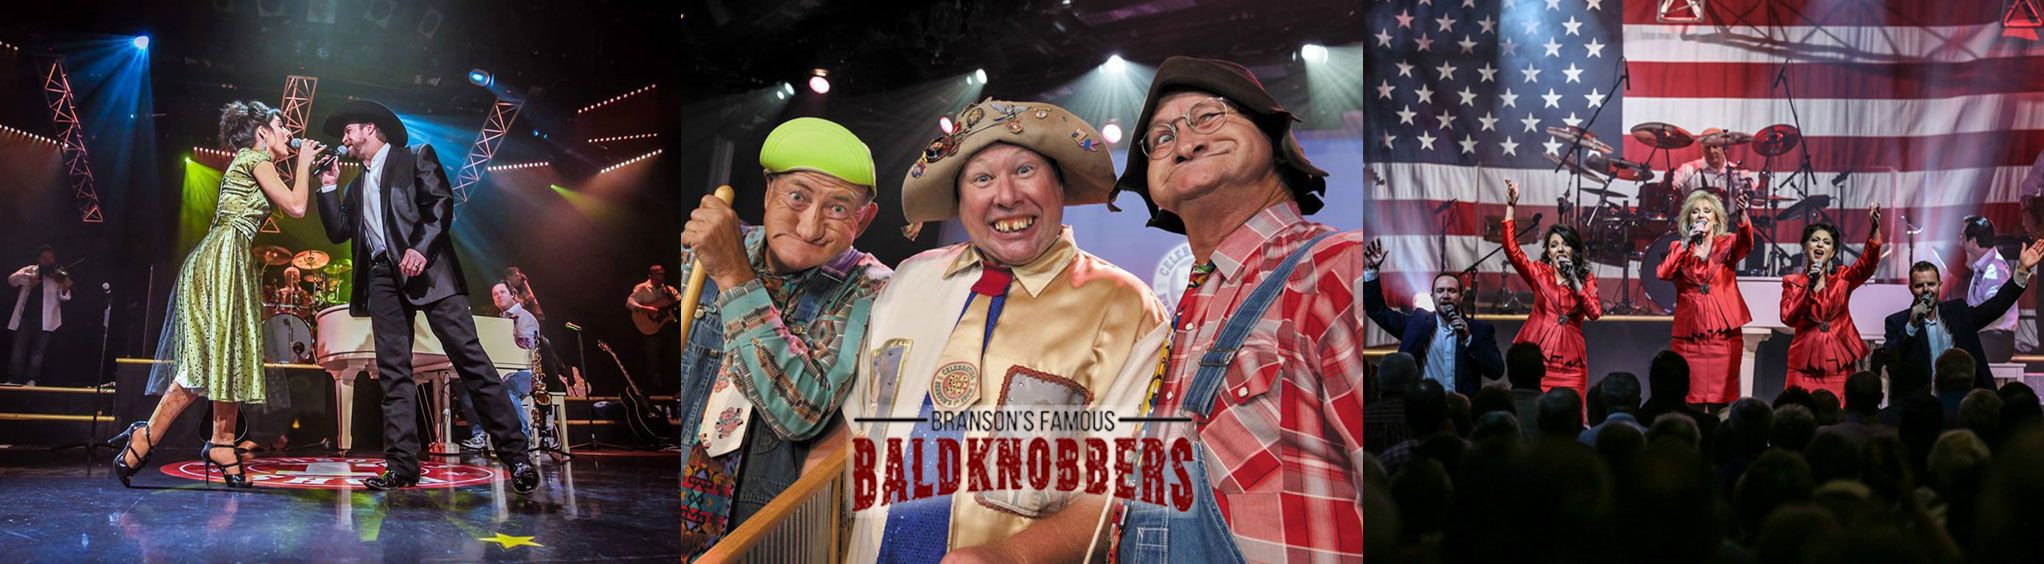 Baldknobbers Country Music Theatre